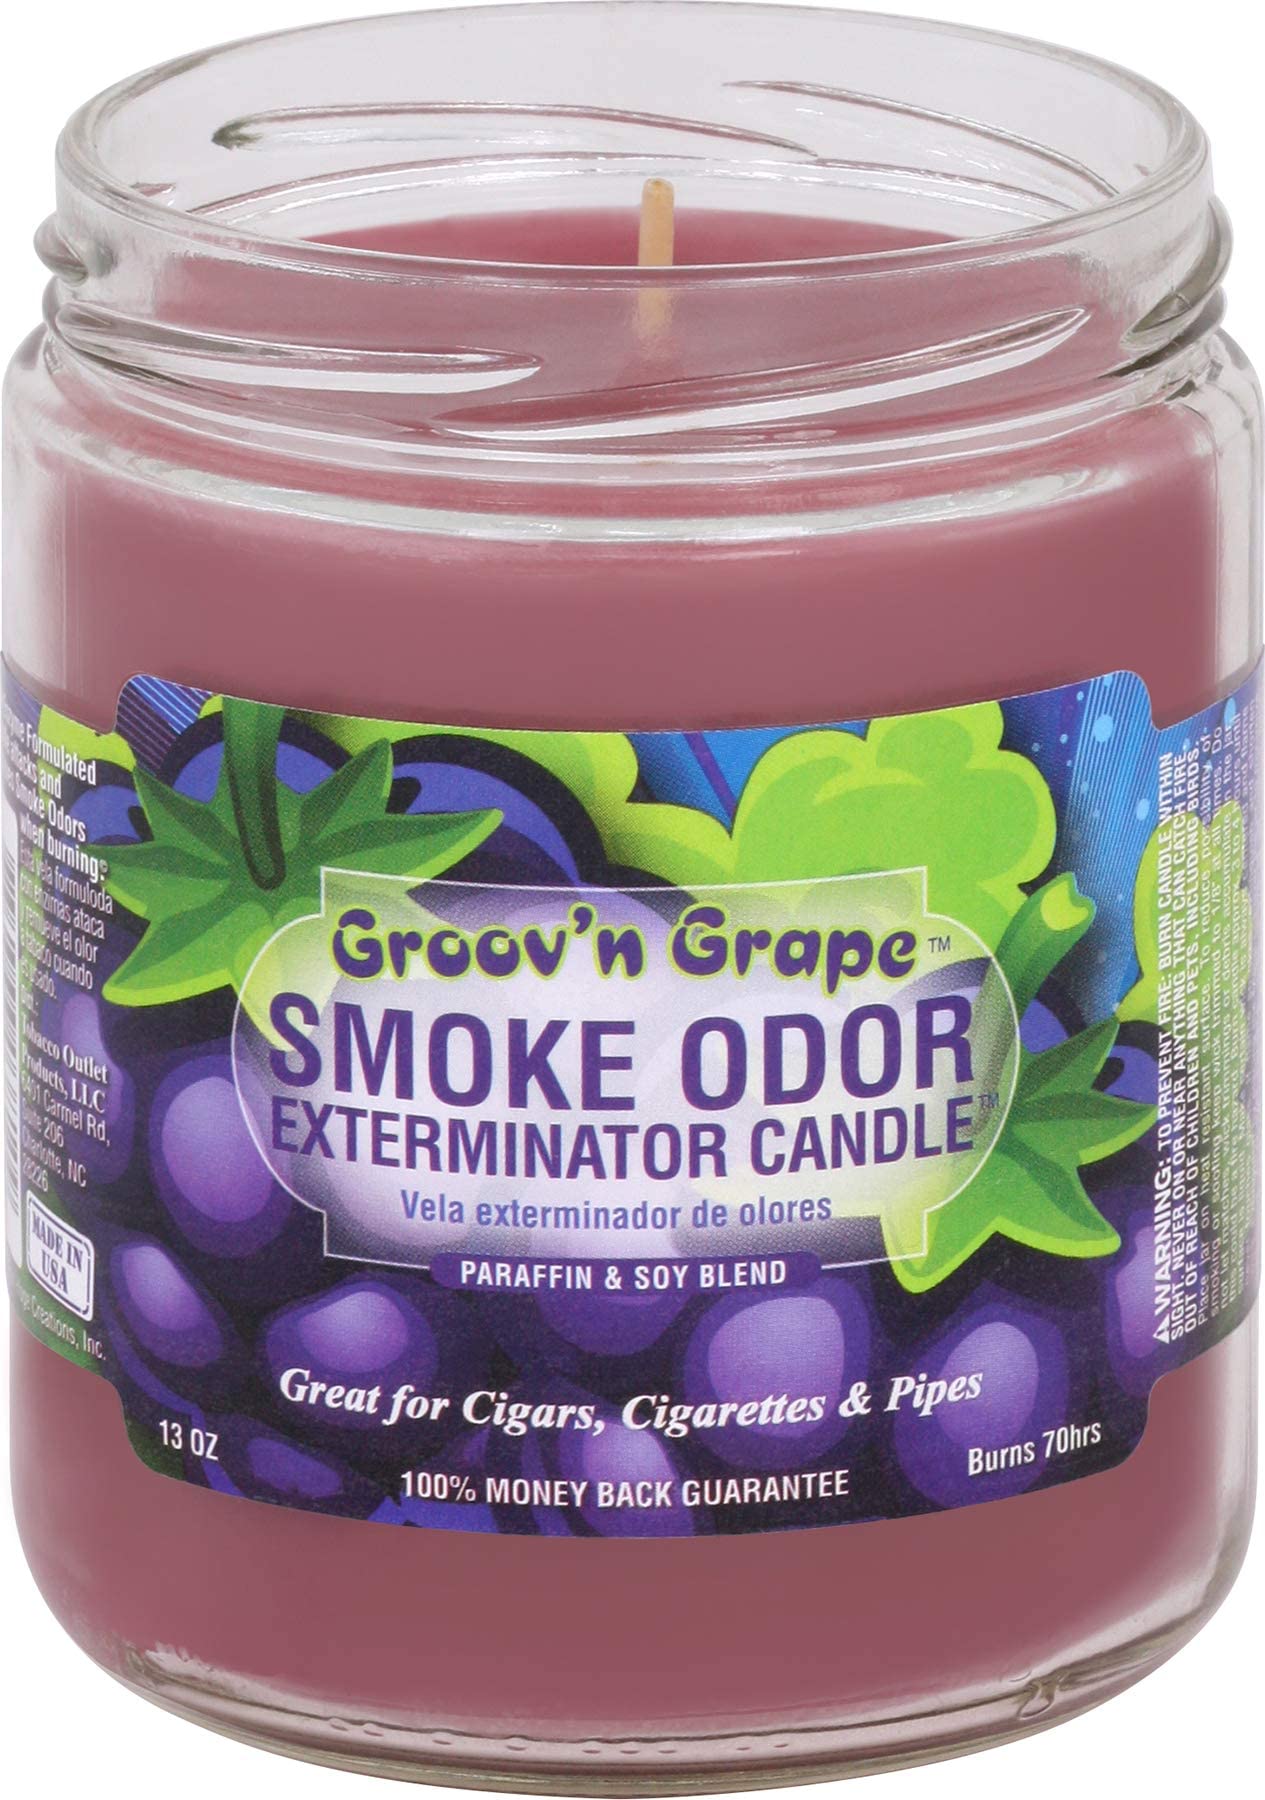 Smoke Odor Candles 13oz Groov'n Grape